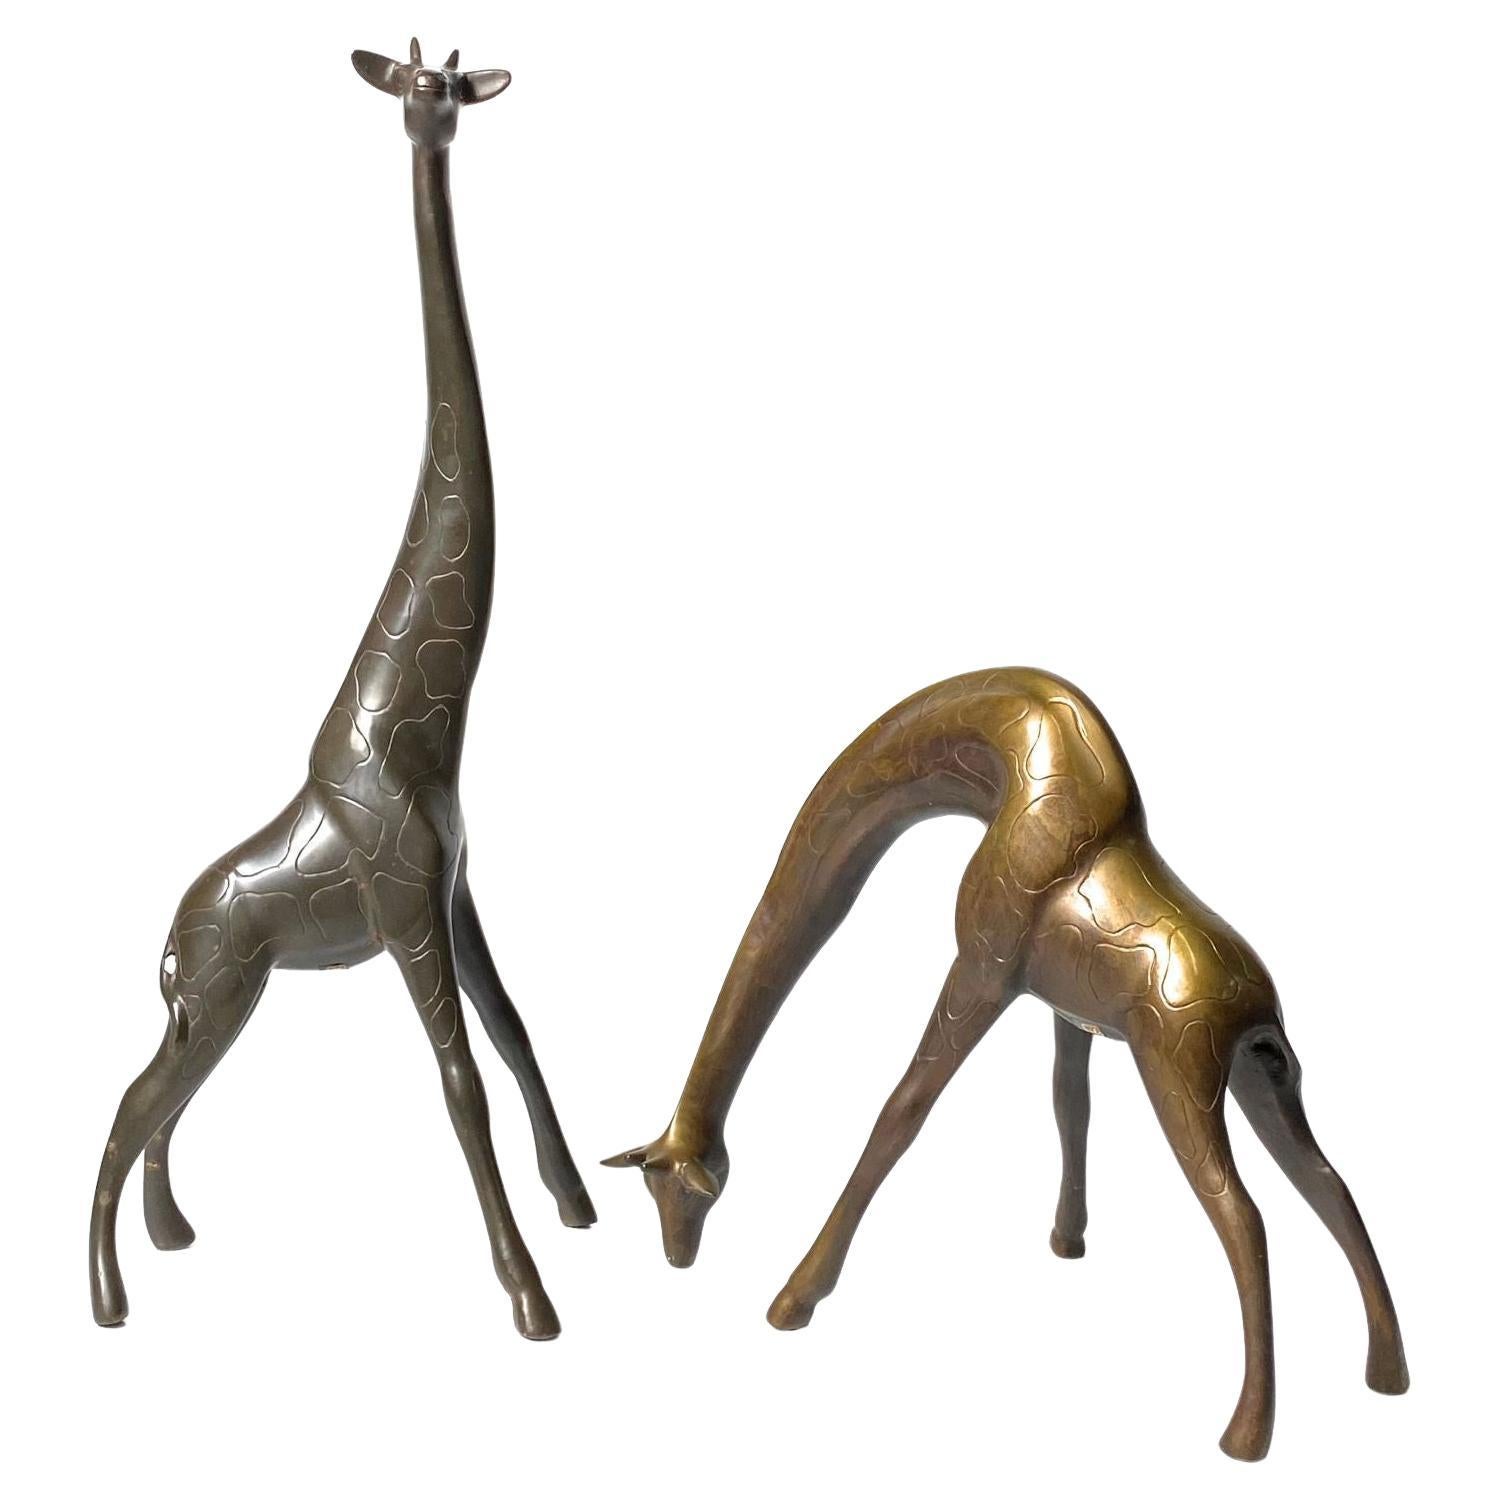 Pair of Vintage Giraffe Sculptures in Bronze and Brass, circa 1970s